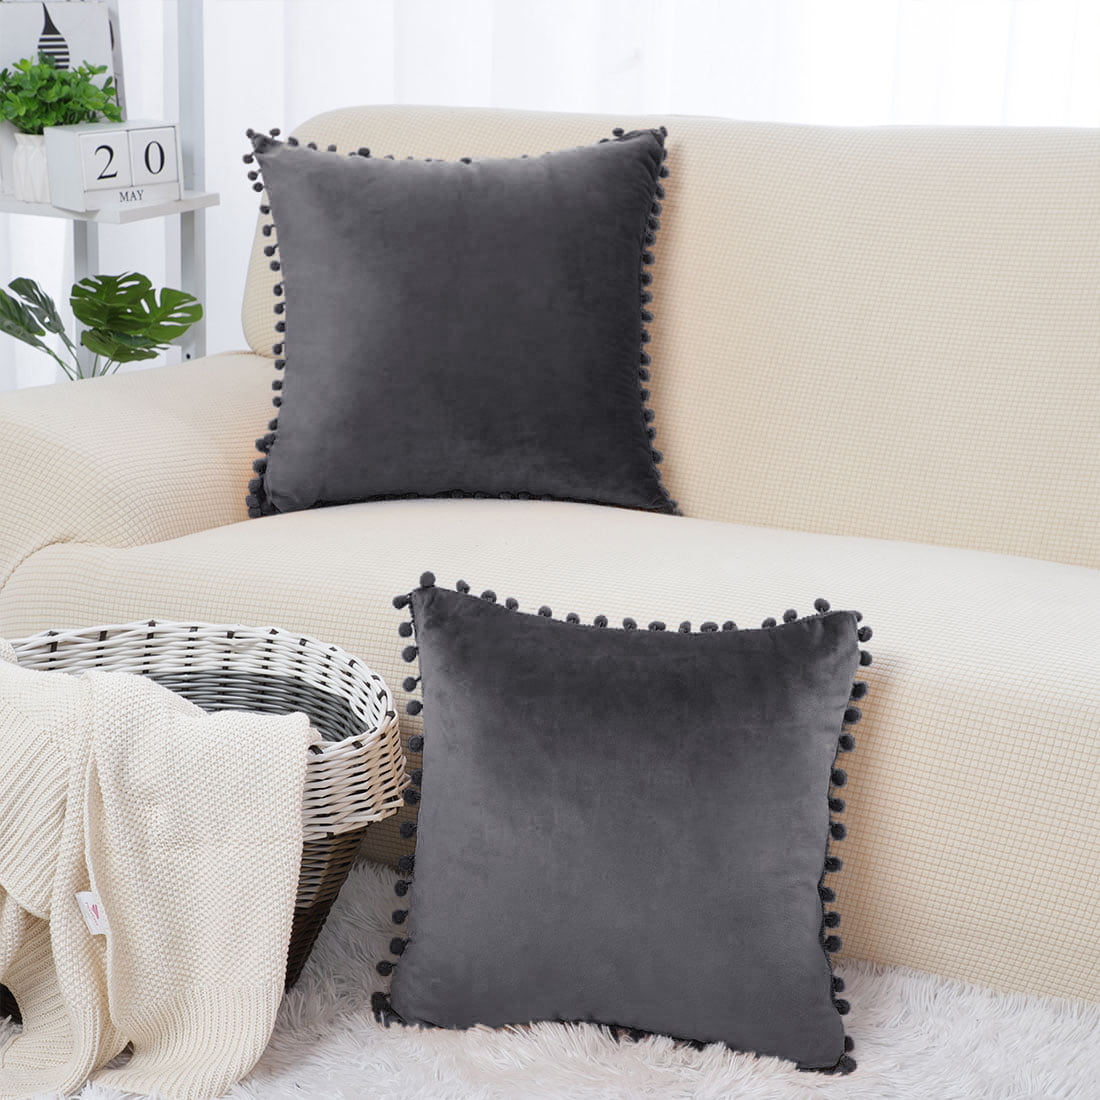 Details about   2pcs Velvet Cushion Cover Pom Poms Ball Sofa Car Throw Pillow Case Home Decor 